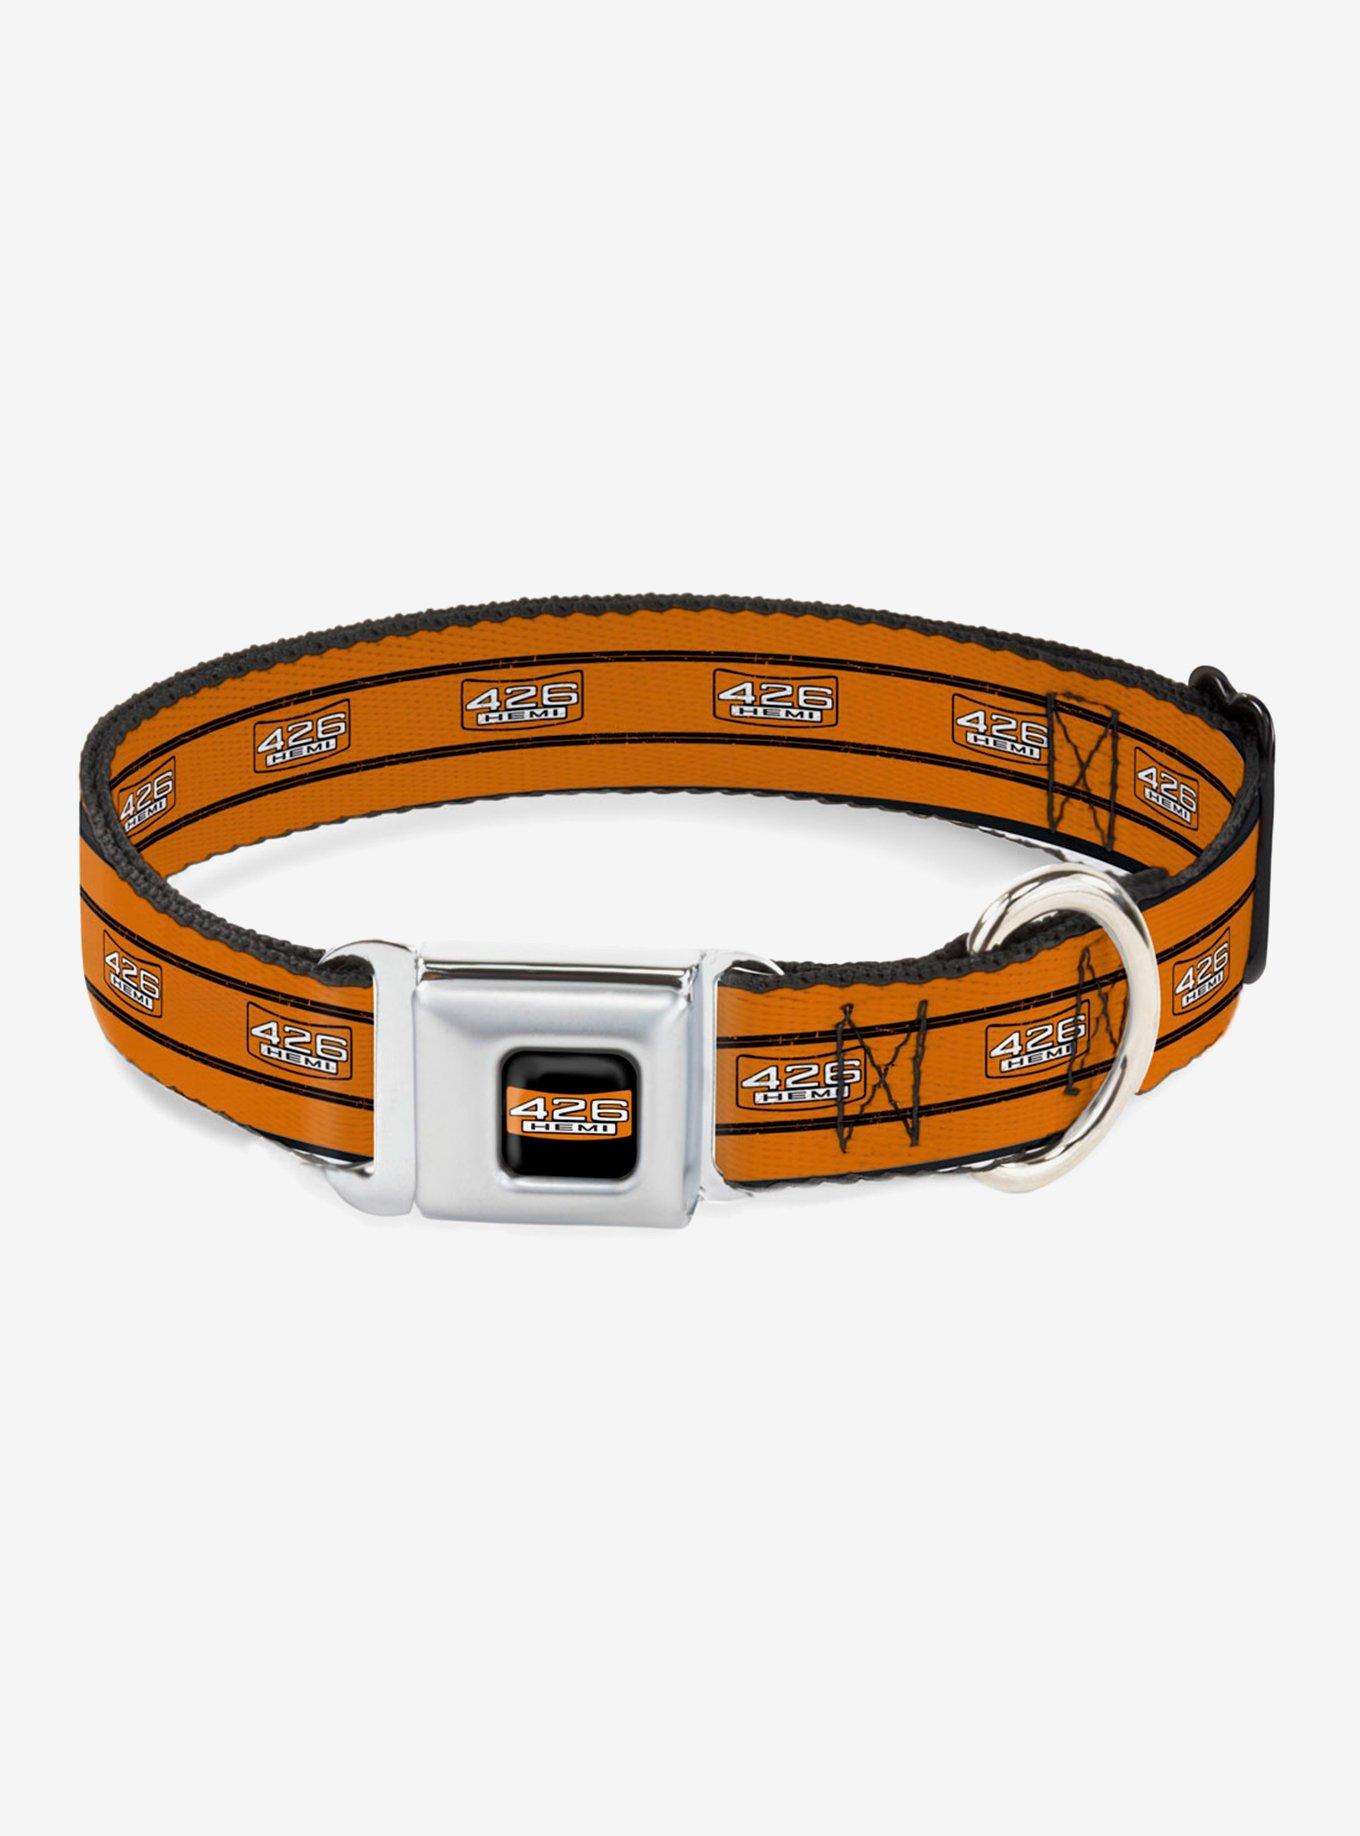 426 Hemi Badge Stripes Weathered Seatbelt Buckle Dog Collar, ORANGE, hi-res